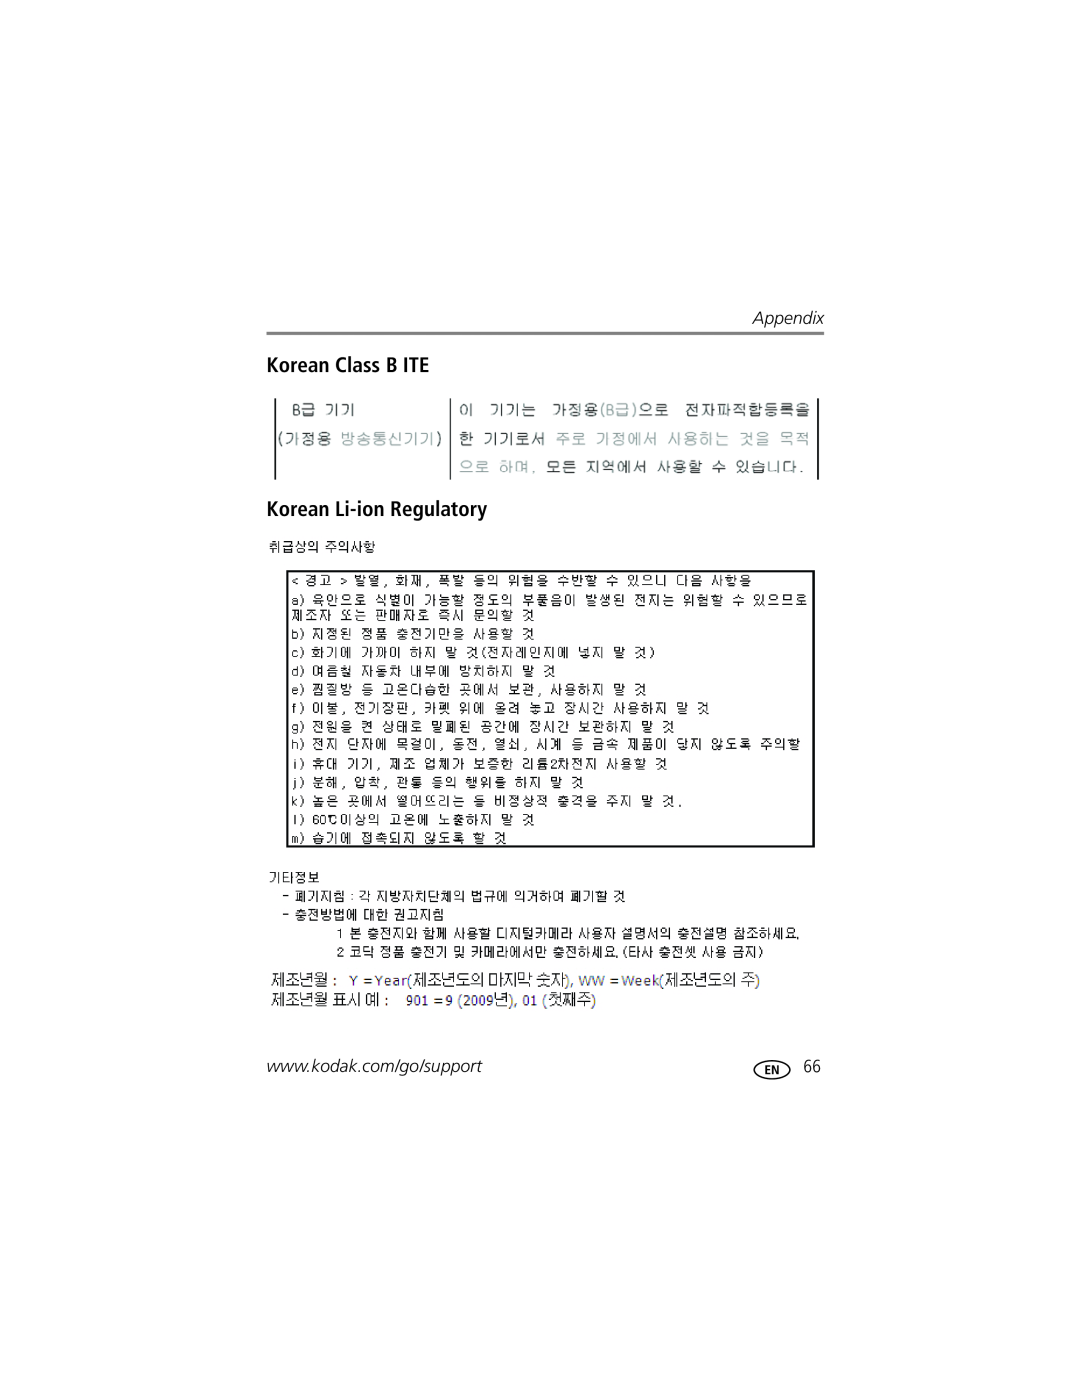 Kodak M577 manual Korean Class B ITE Korean Li-ion Regulatory, Appendix 